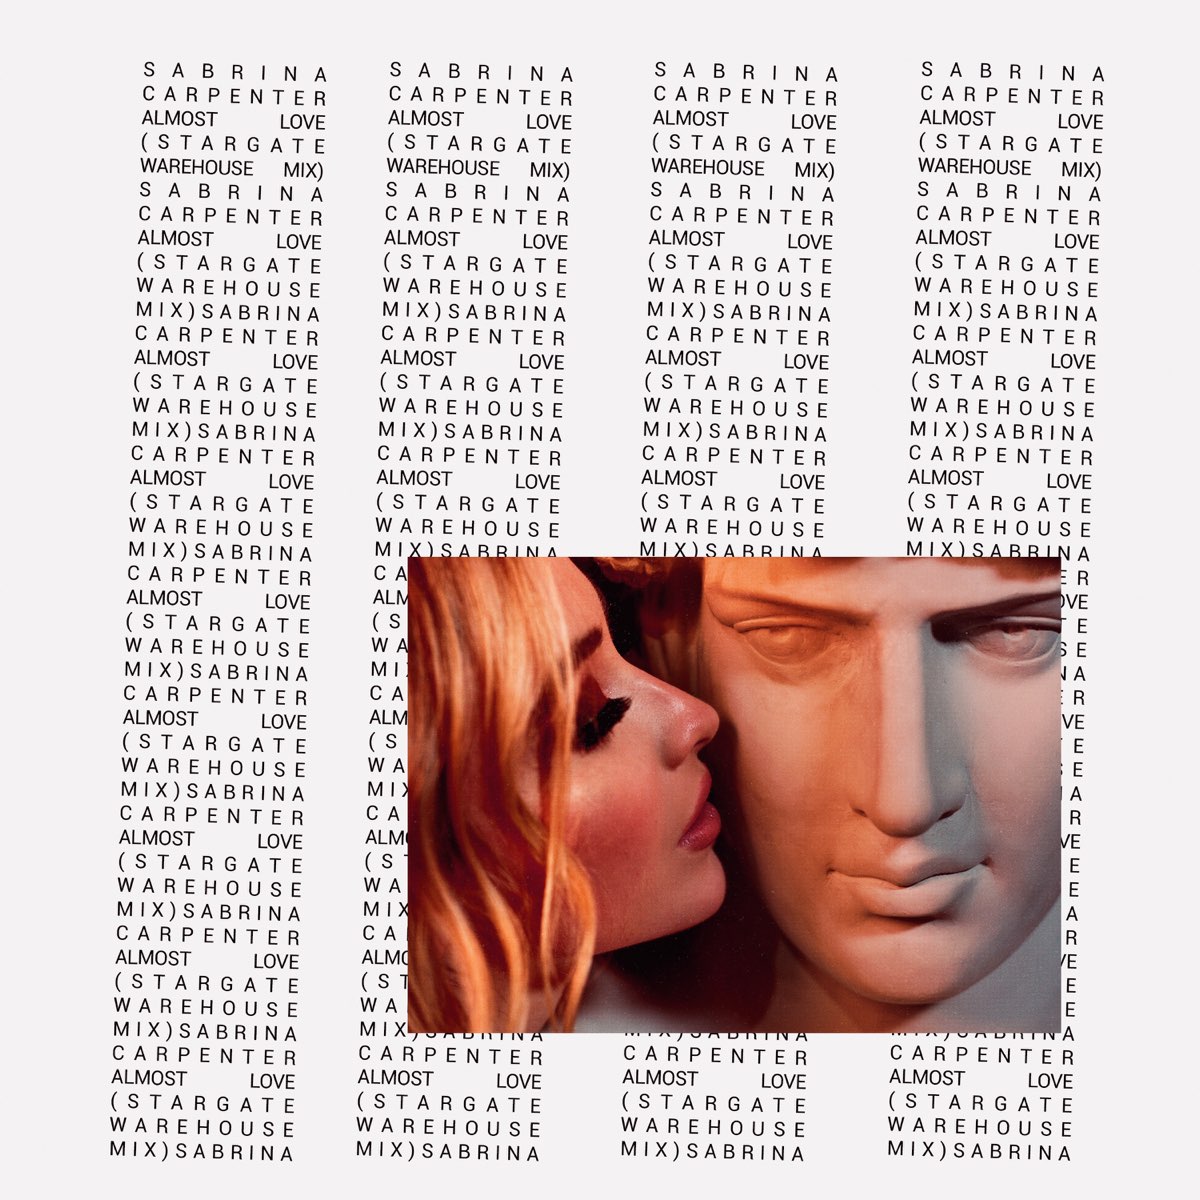 Sabrina Carpenter — Almost Love - Stargate Warehouse Mix cover artwork